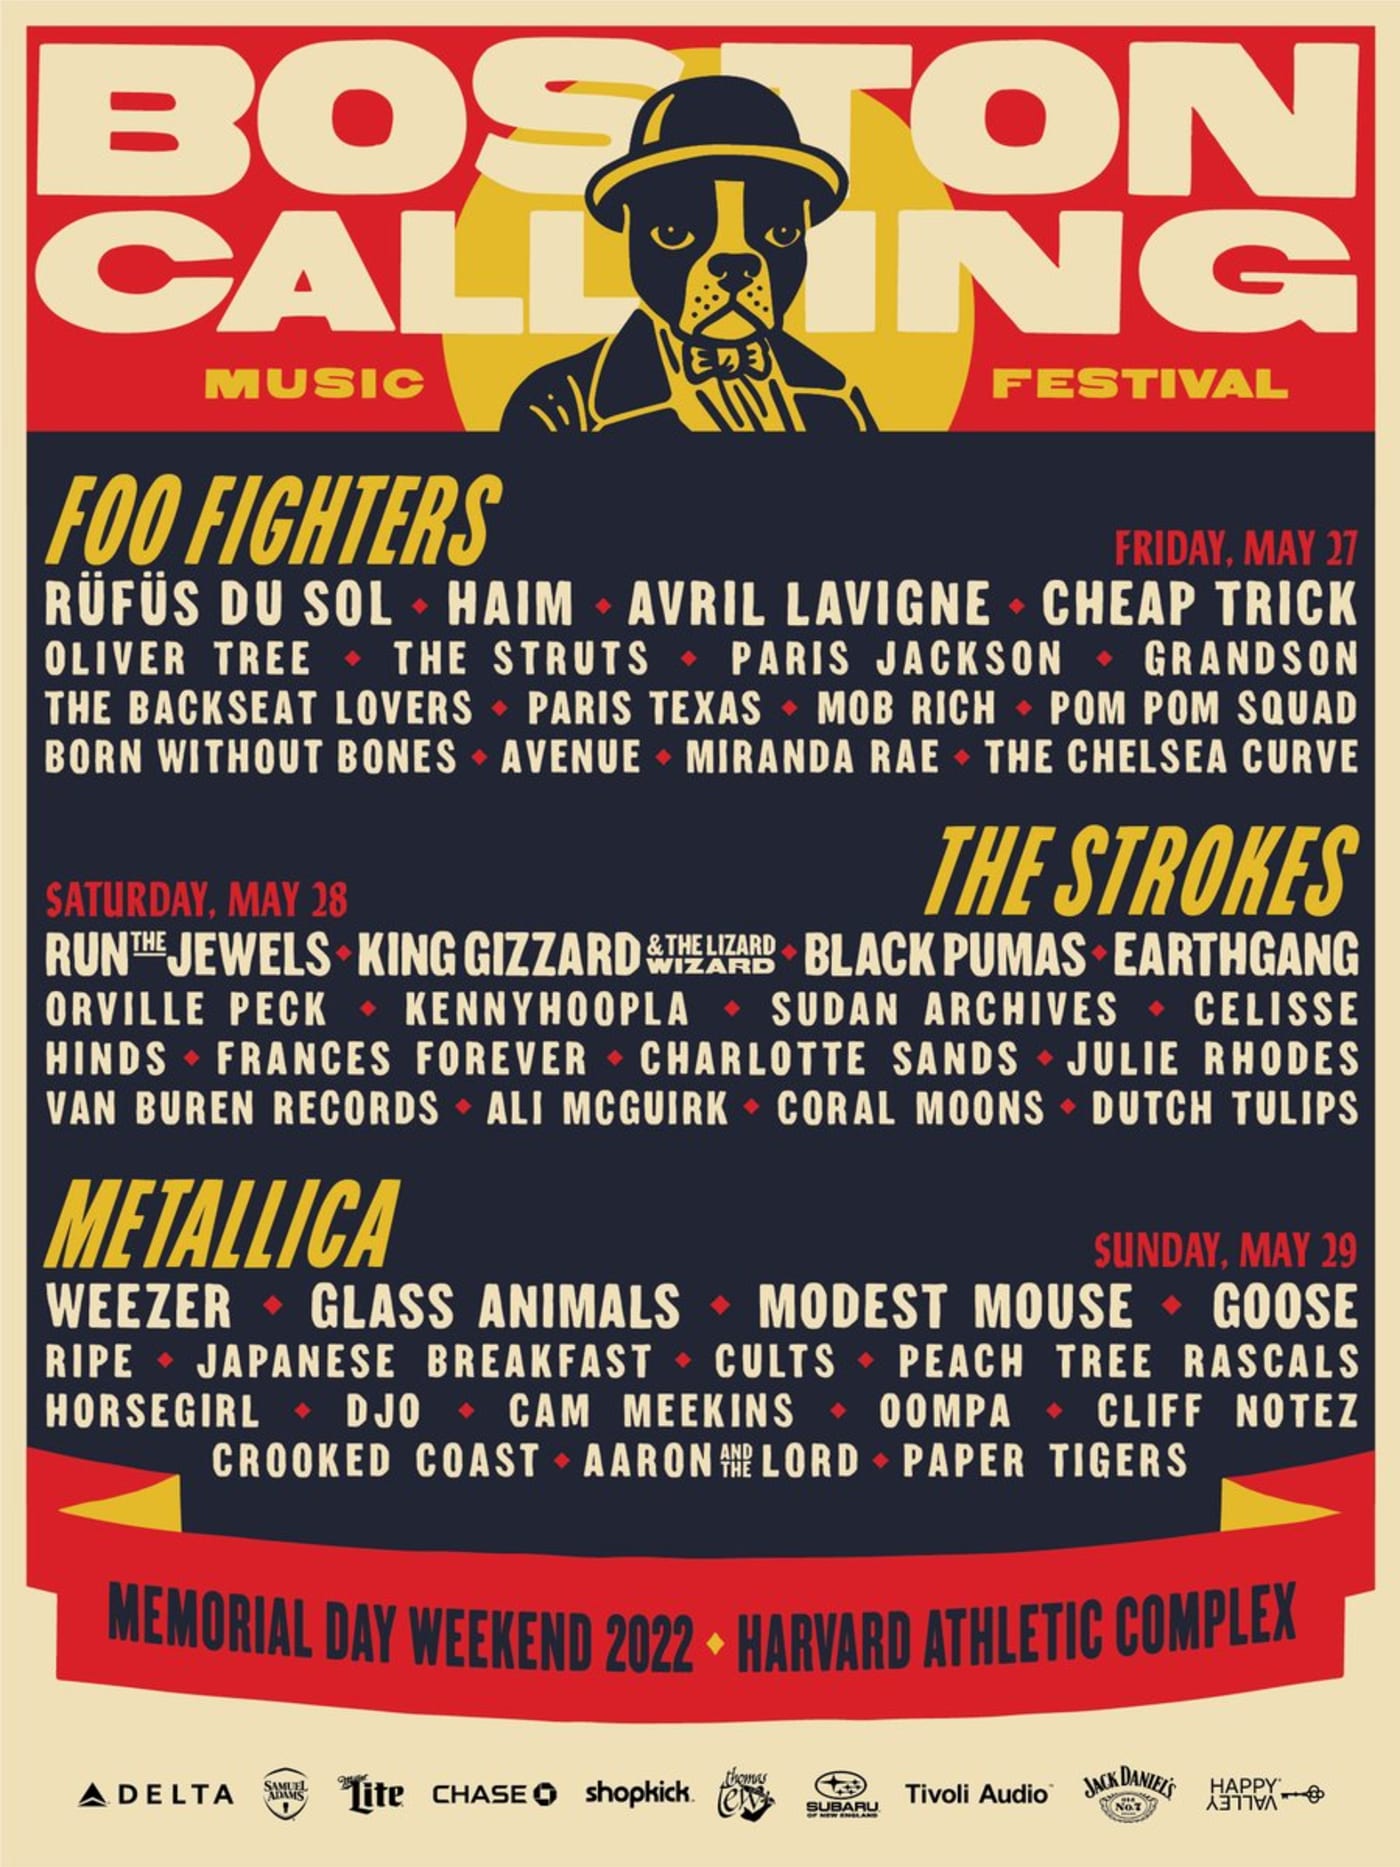 Boston Calling festival shares a flyer